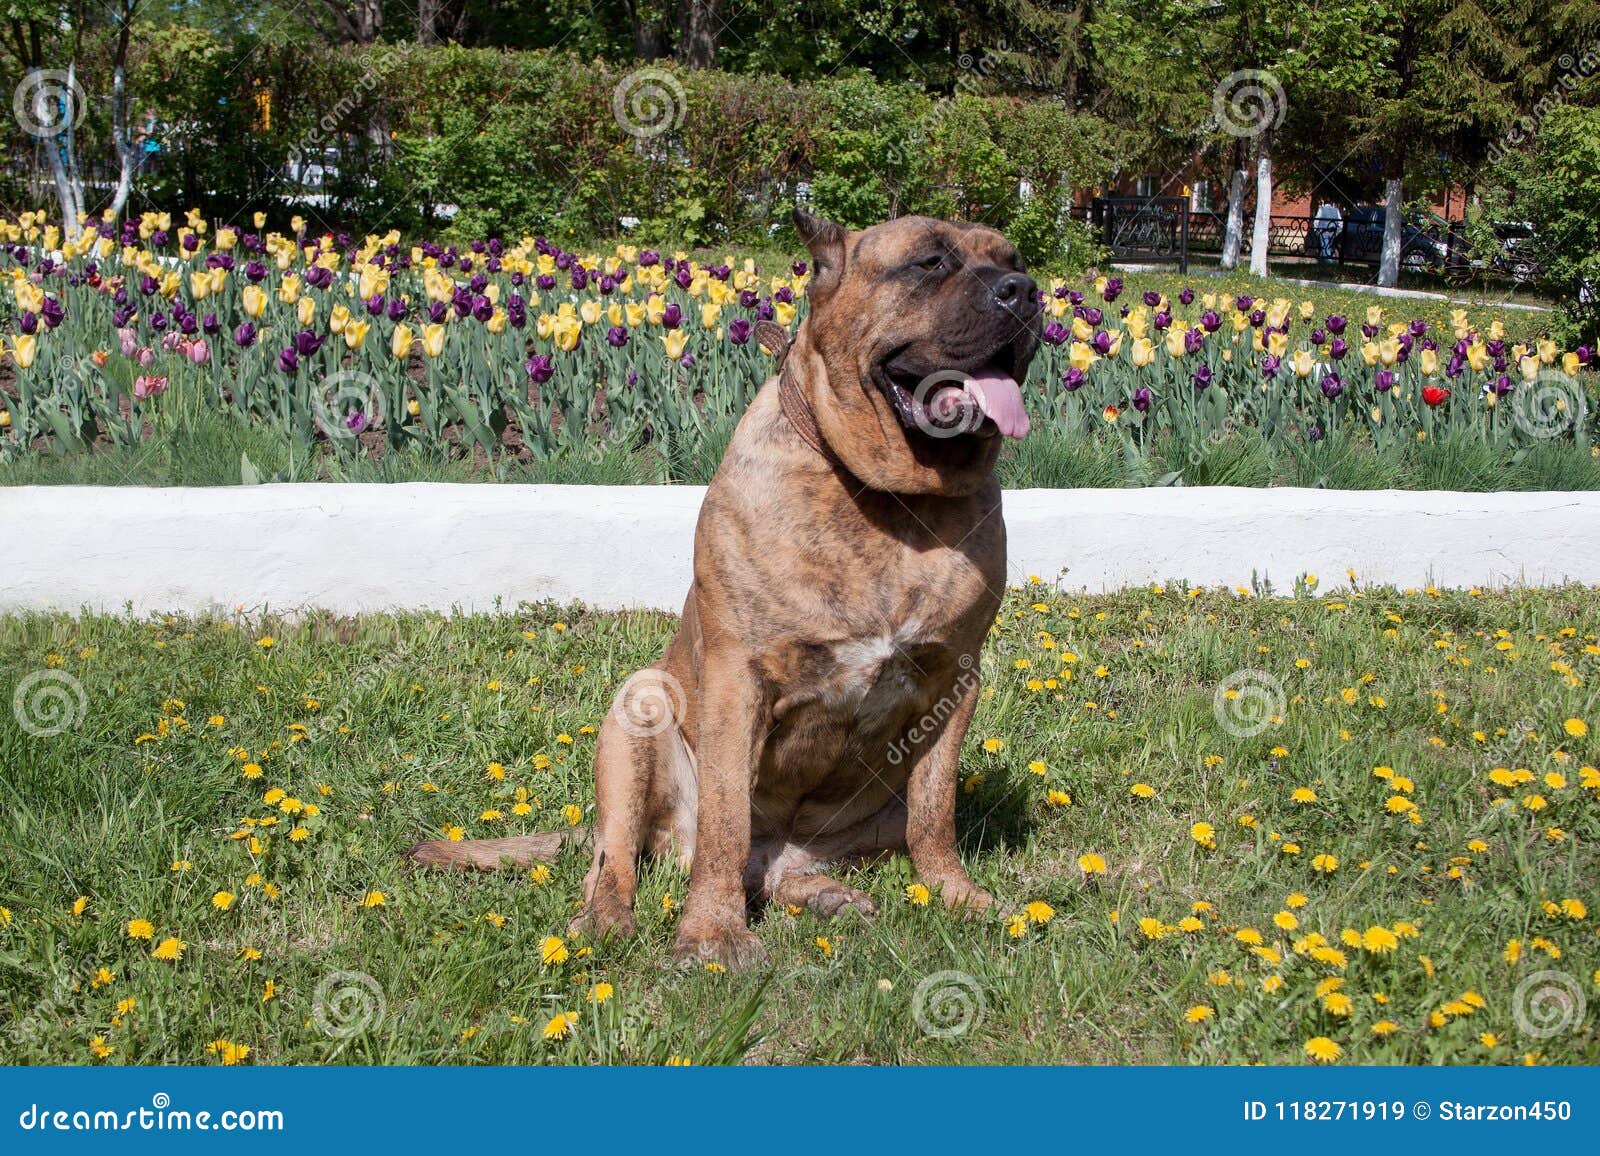 canary mastiff is sitting near a flower bed with tulips. perro de presa canario or canarian molosser.